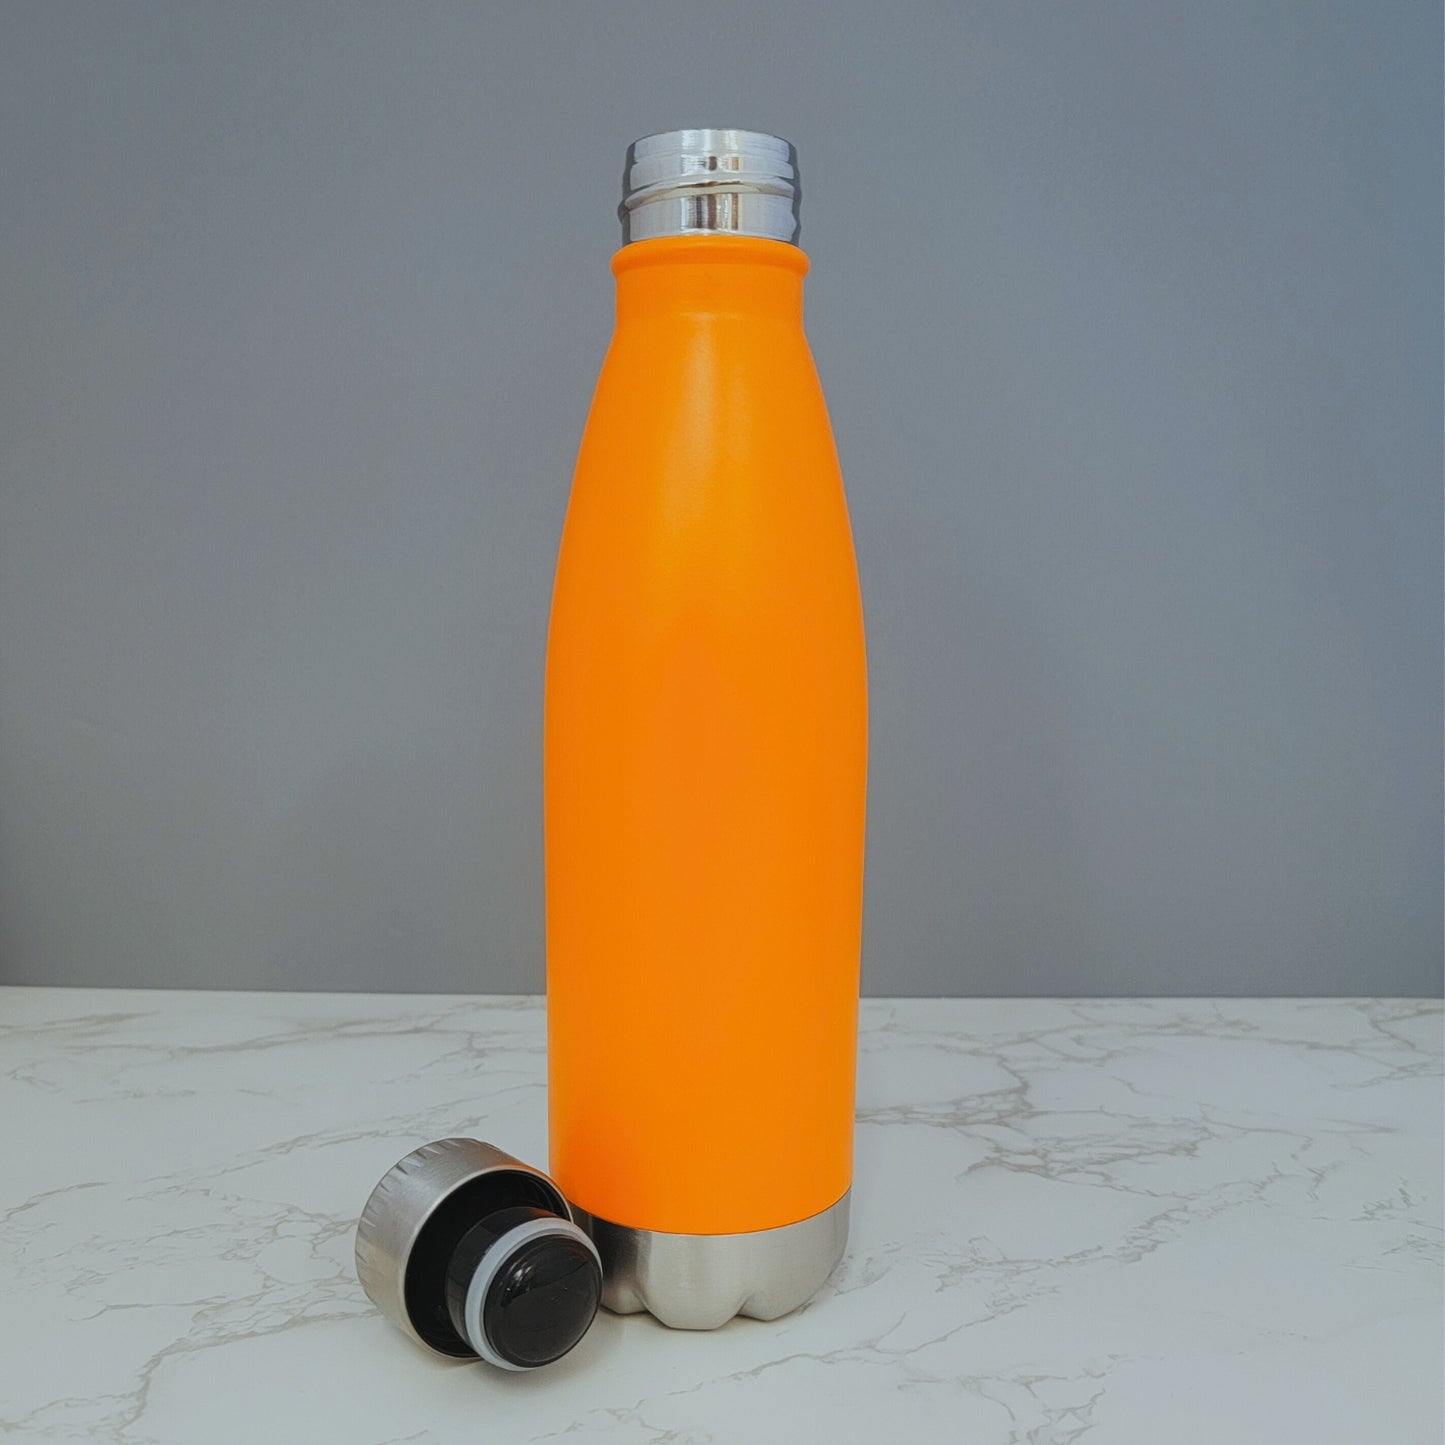 Basic Witch Halloween Theme Orange 17oz Water Bottle LA5137